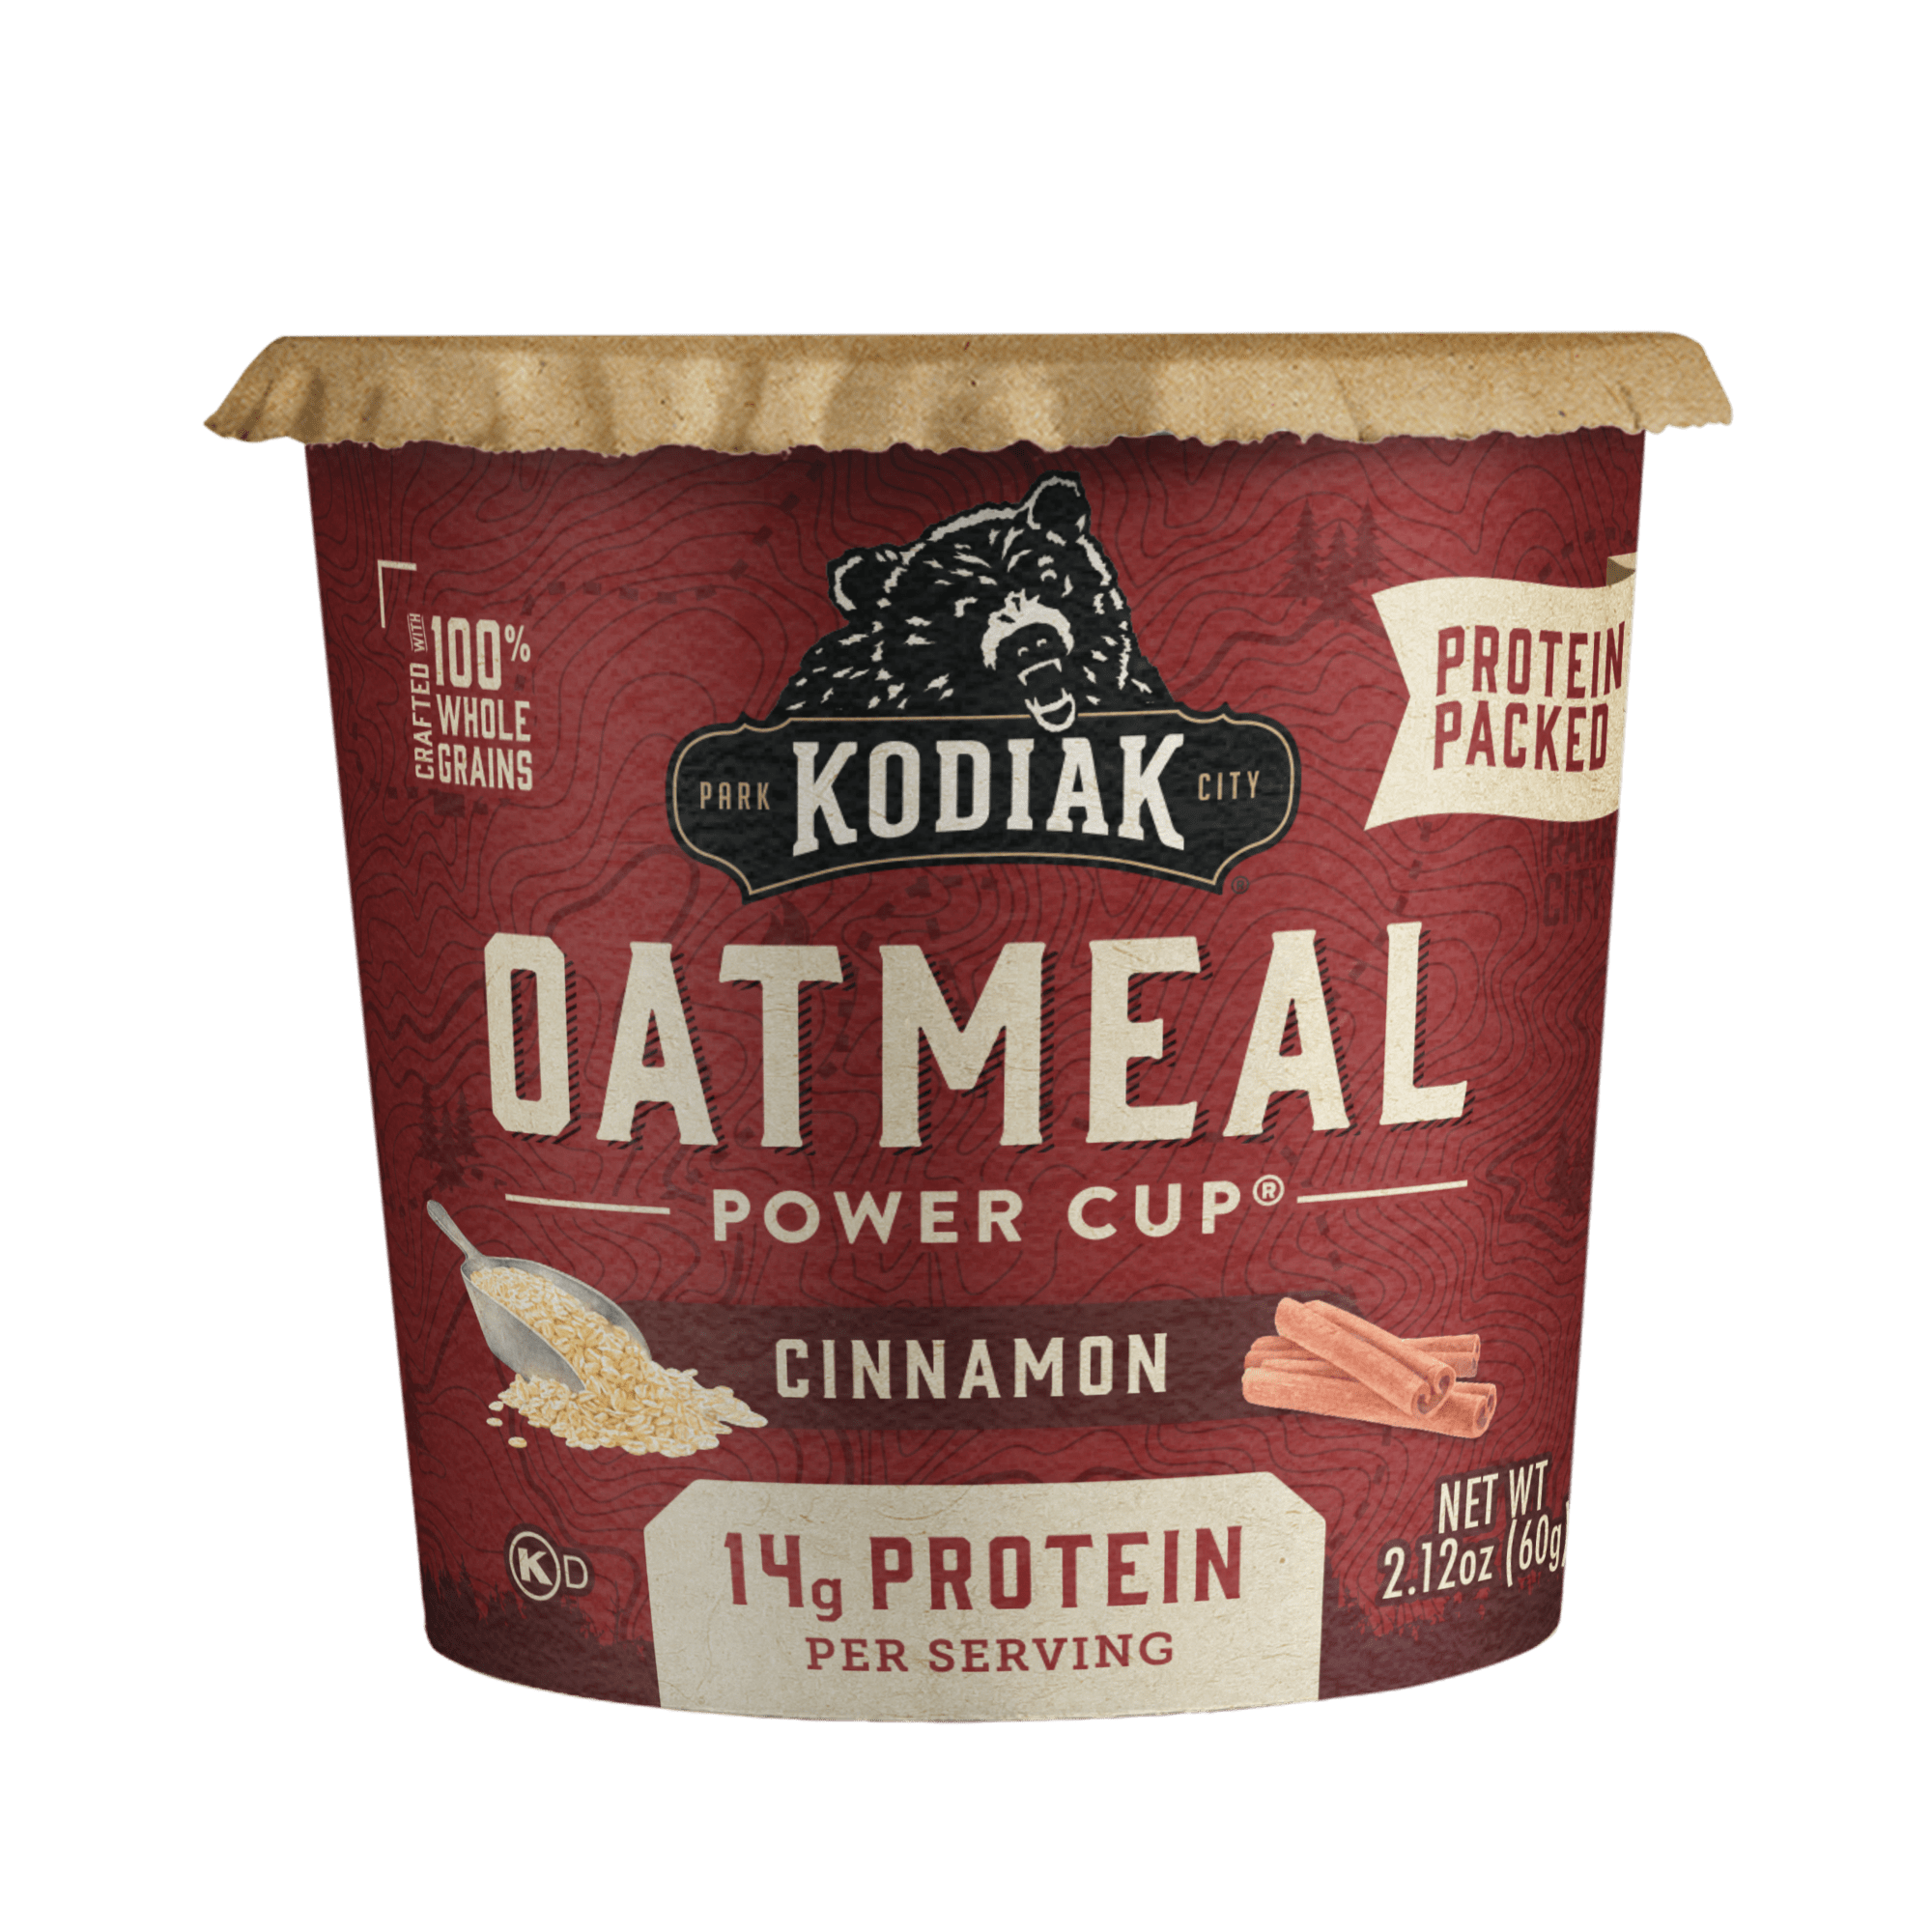 Kodiak Cakes Unleashed Oatmeal, Cinnamon - 2.12 oz